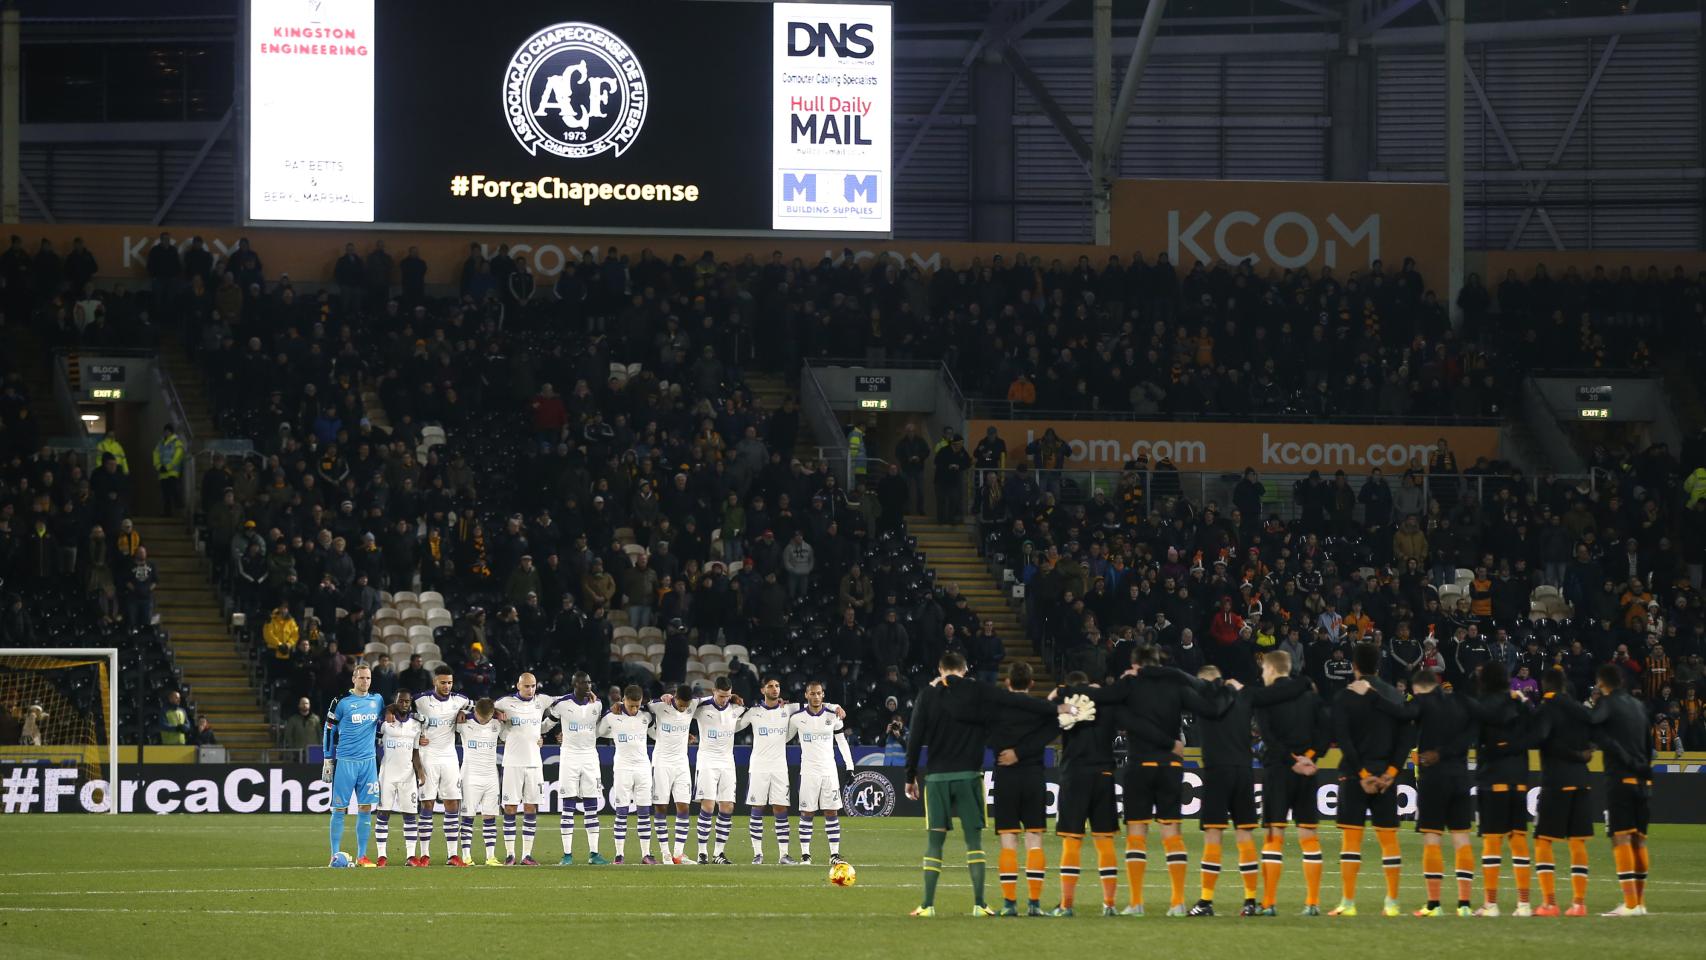 En el partido Hull - Newcastle de la Copa de la liga inglesa se recordó al Chapecoense.